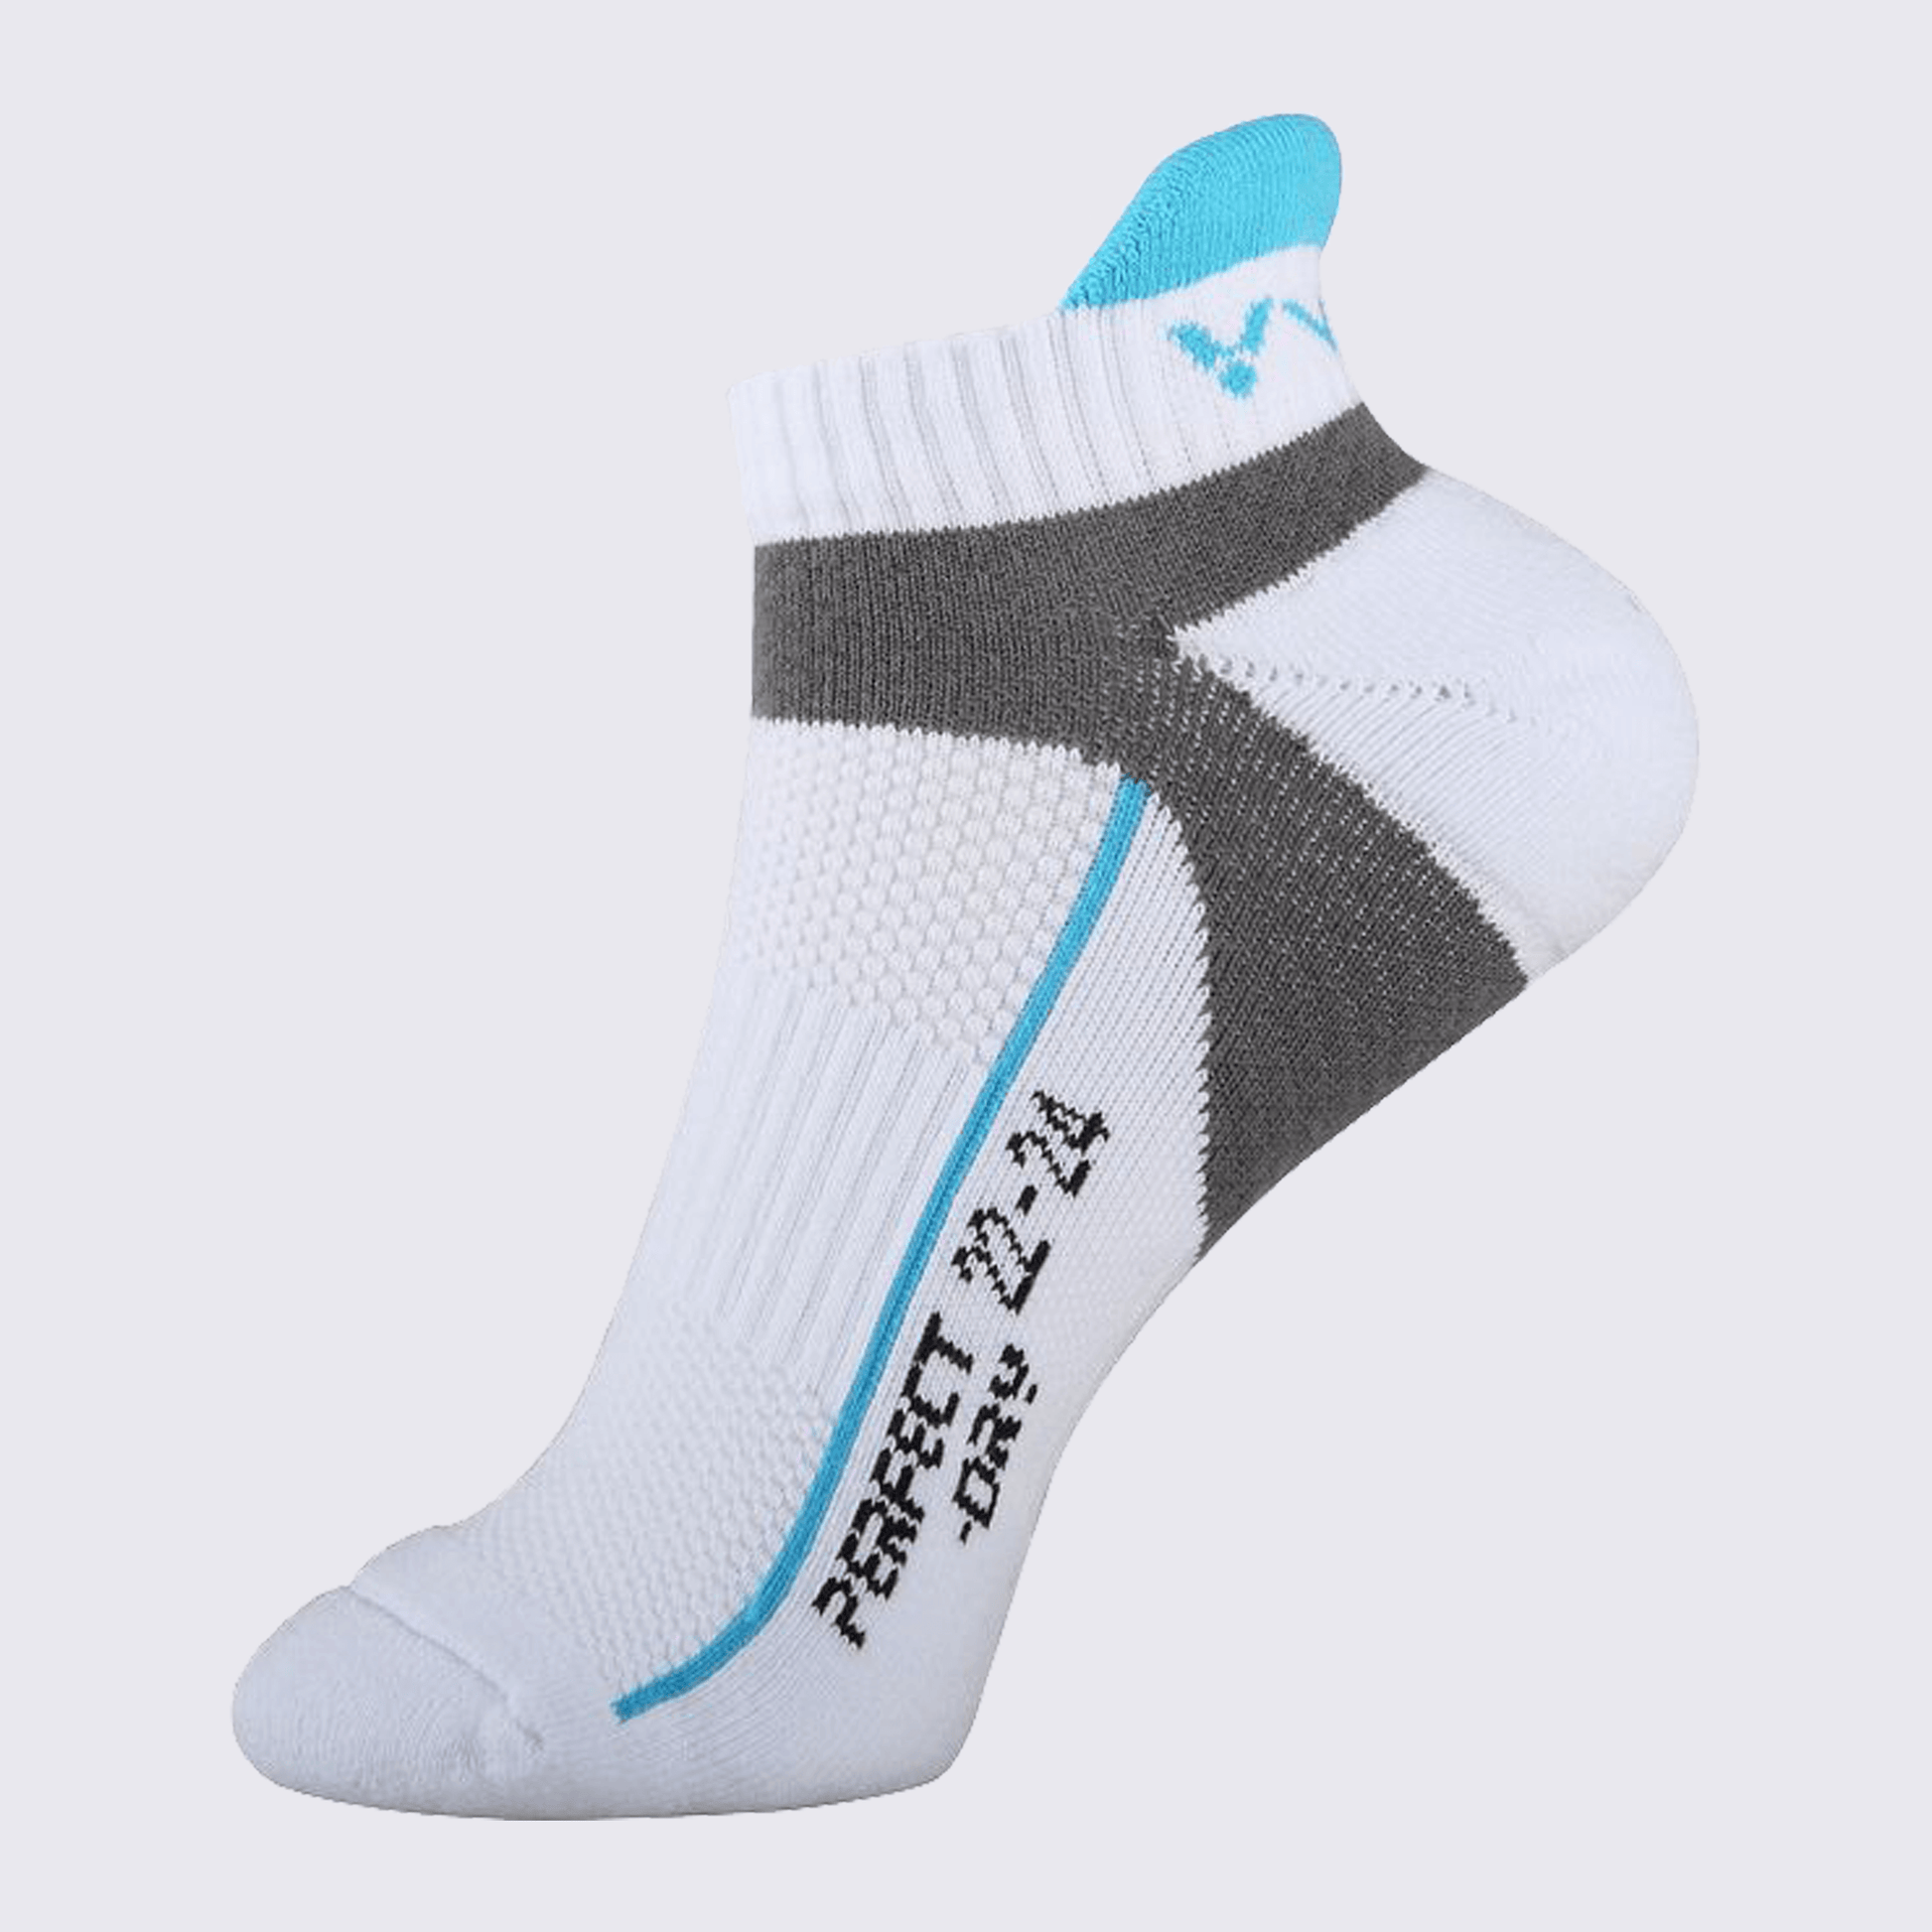 Victor Women's Sports Socks SK244M (Light Blue)